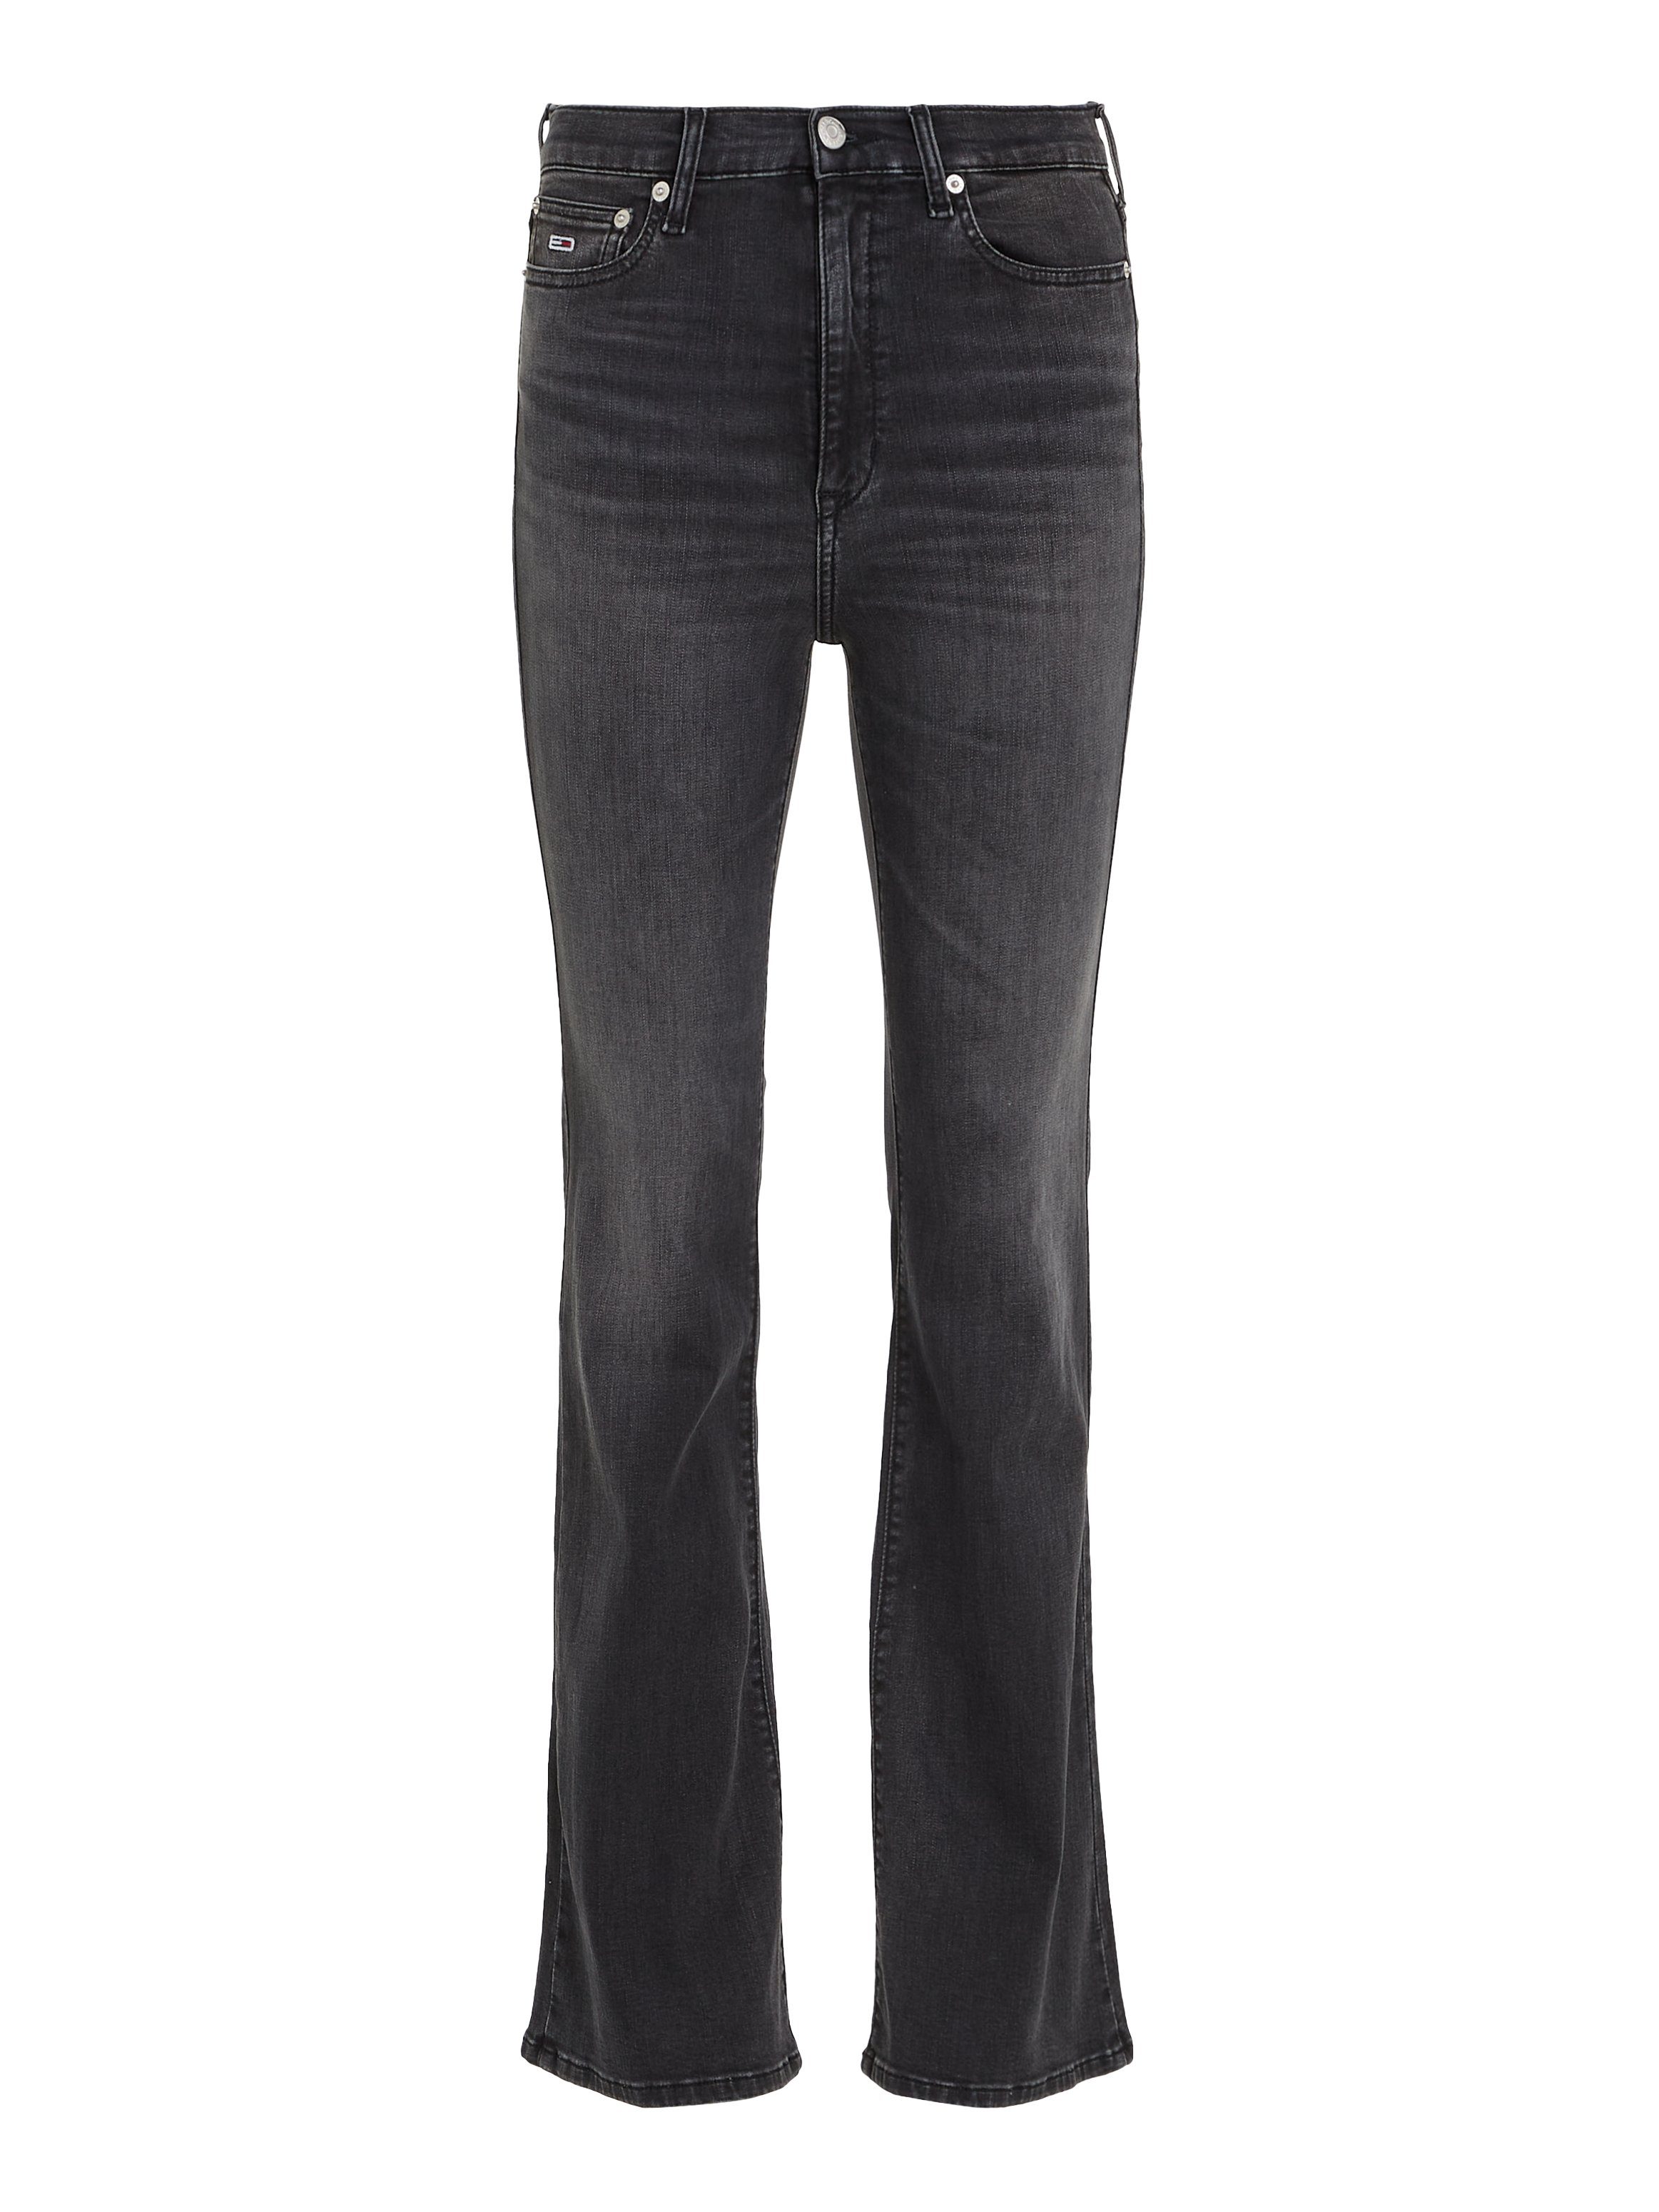 Markenlabel Jeans Sylvia Bequeme black30 Tommy mit Jeans